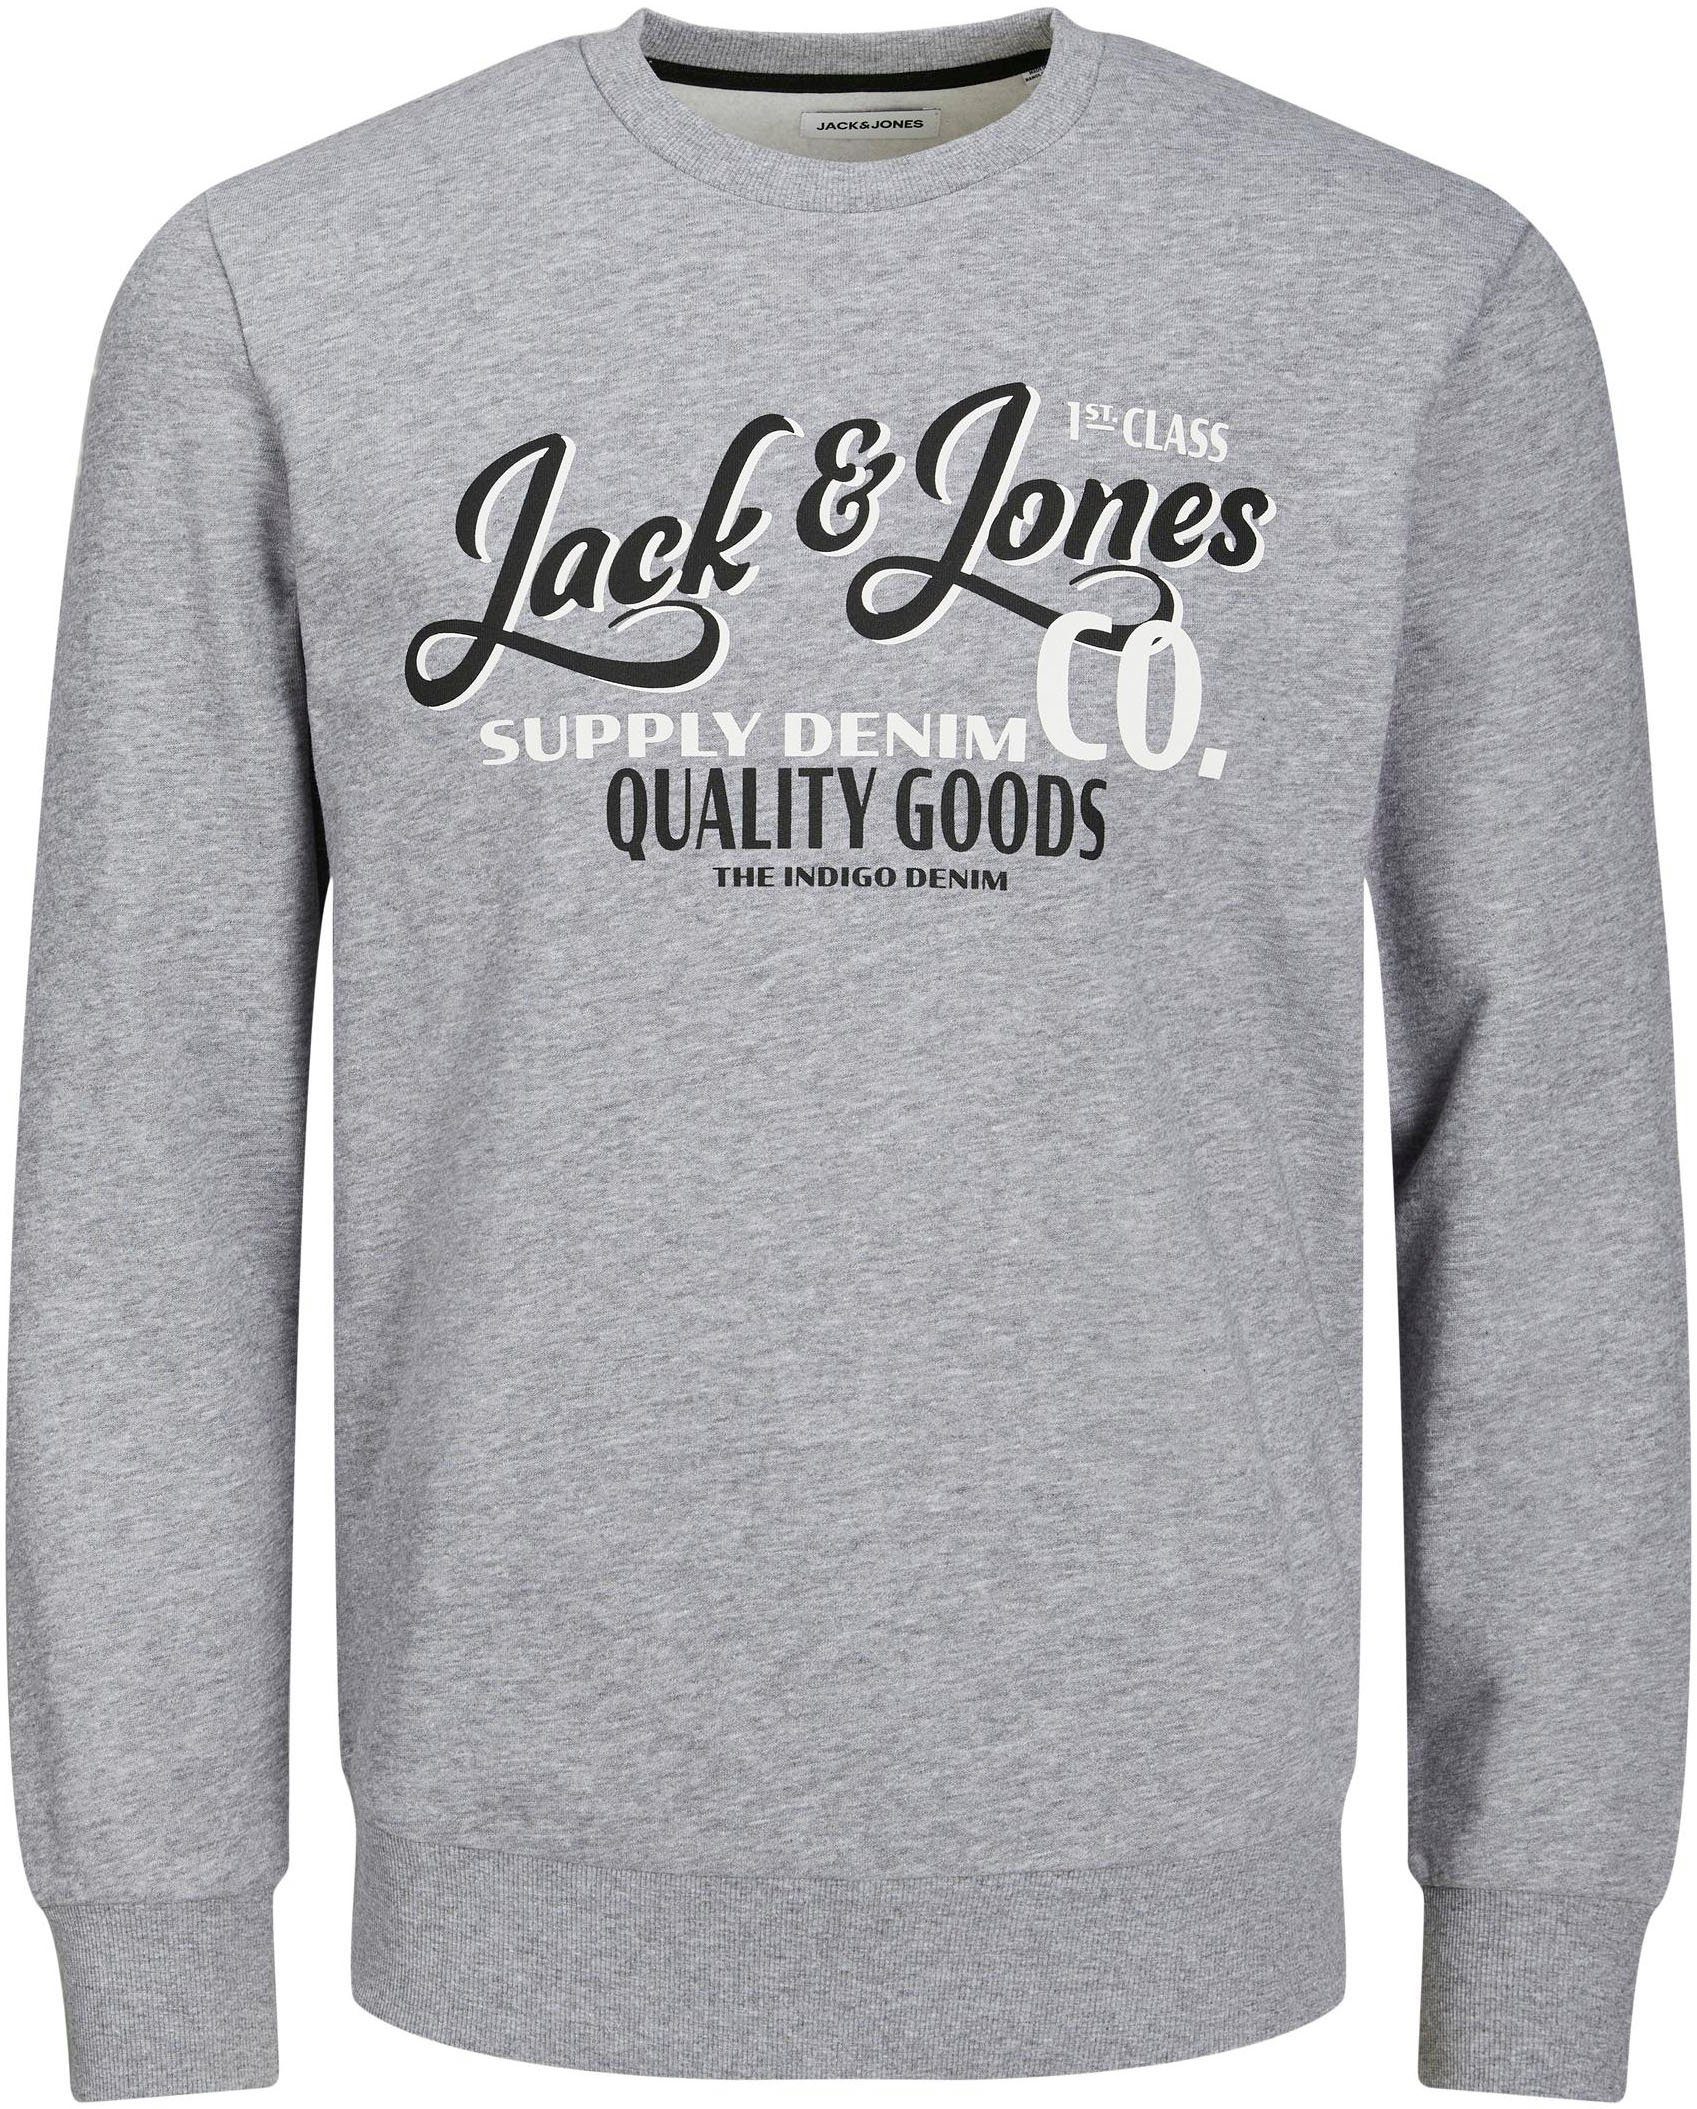 Jack & Jones Sweatshirt JJ NECK CREW mel JJANDY SWEAT grau h